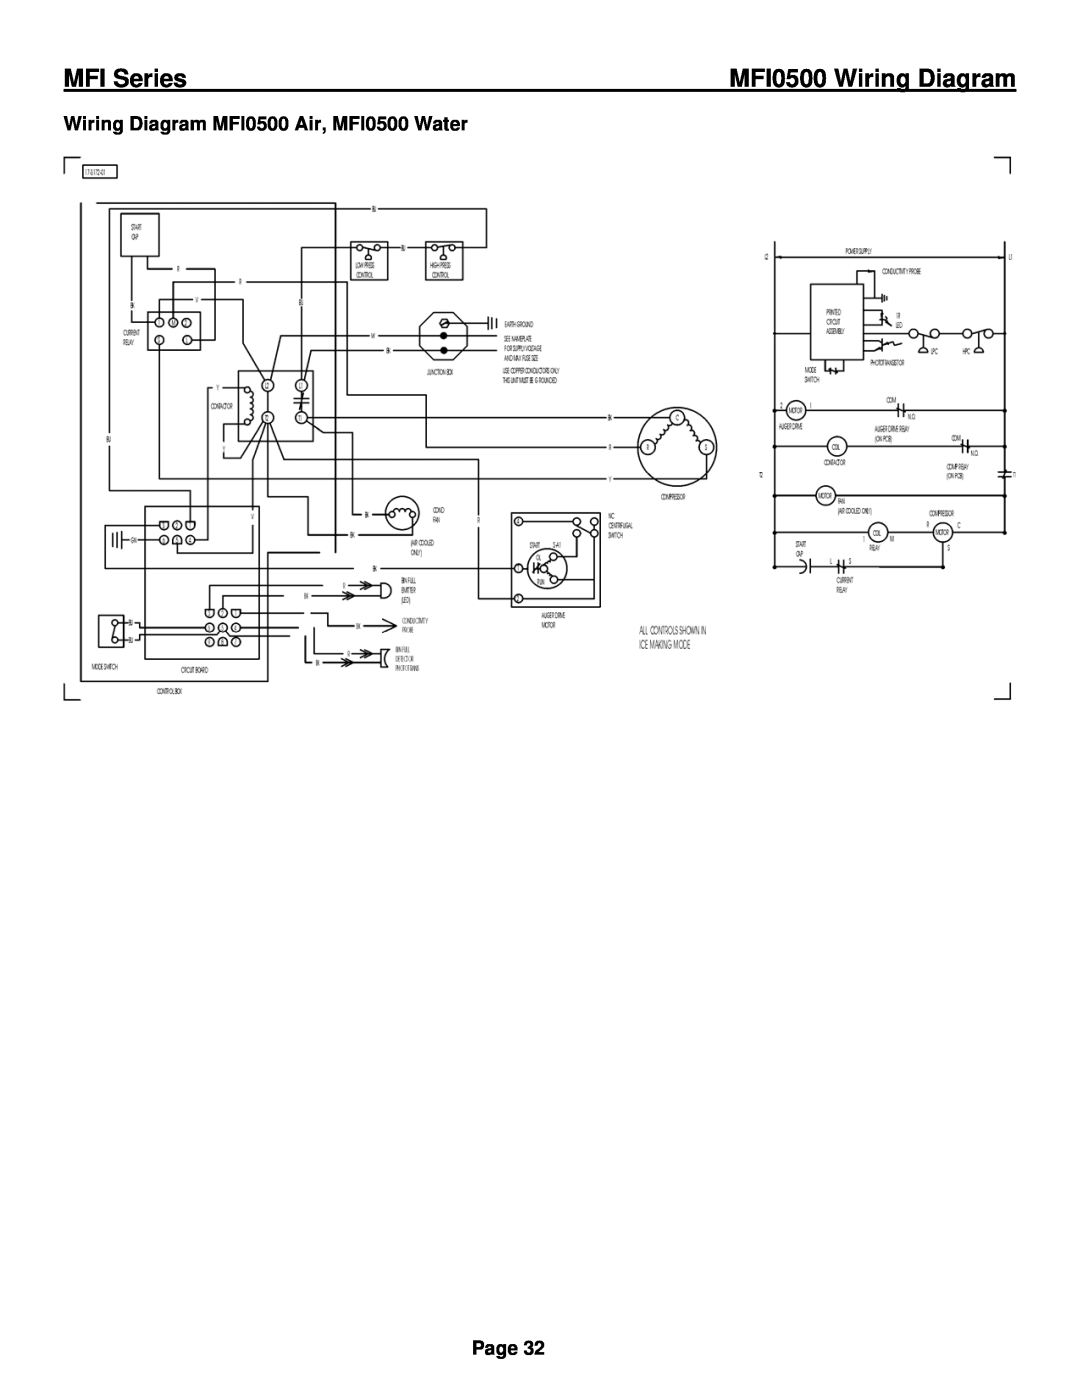 Ice-O-Matic installation manual MFI0500 Wiring Diagram, Wiring Diagram MFI0500 Air, MFI0500 Water, MFI Series, Page 